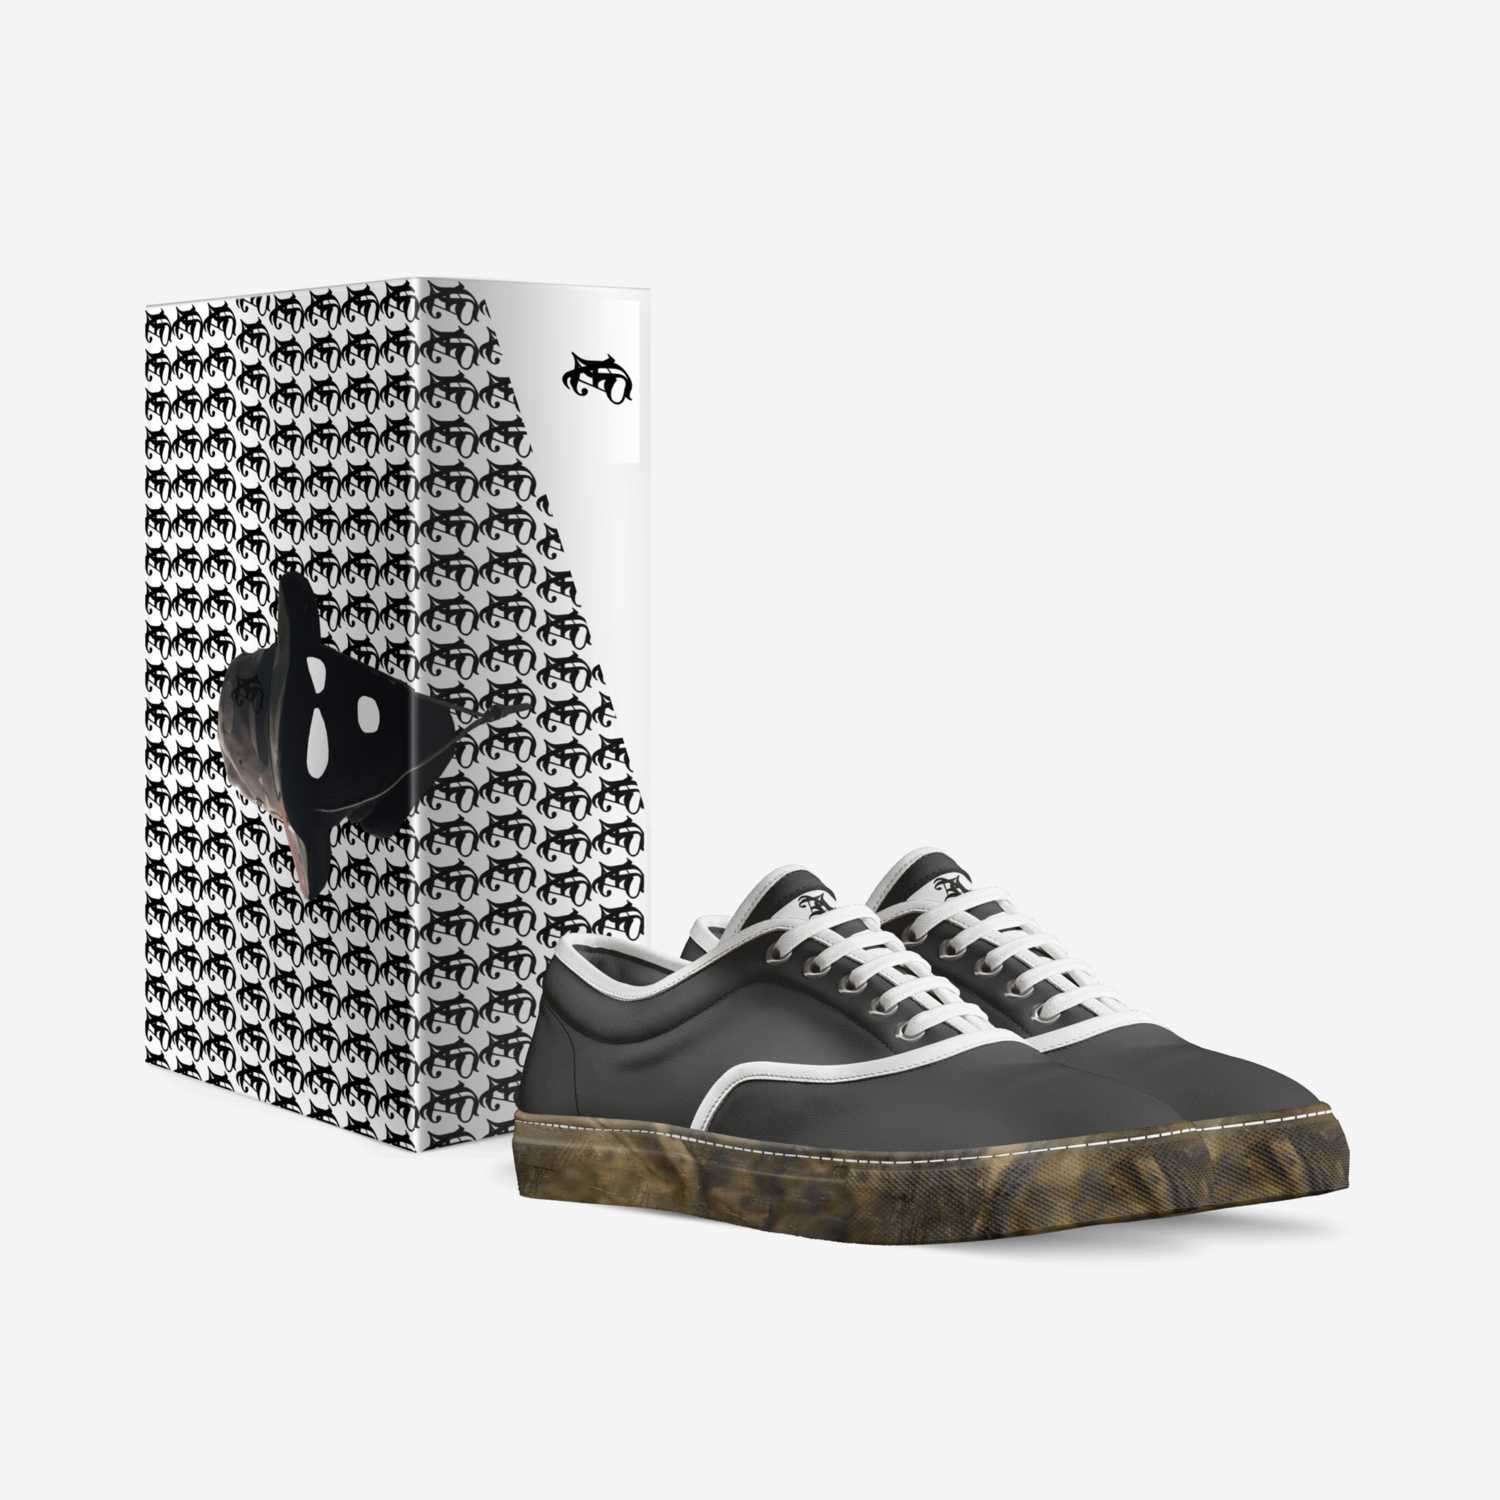 AJ SKATER II custom made in Italy shoes by Antoine Janssen | Box view